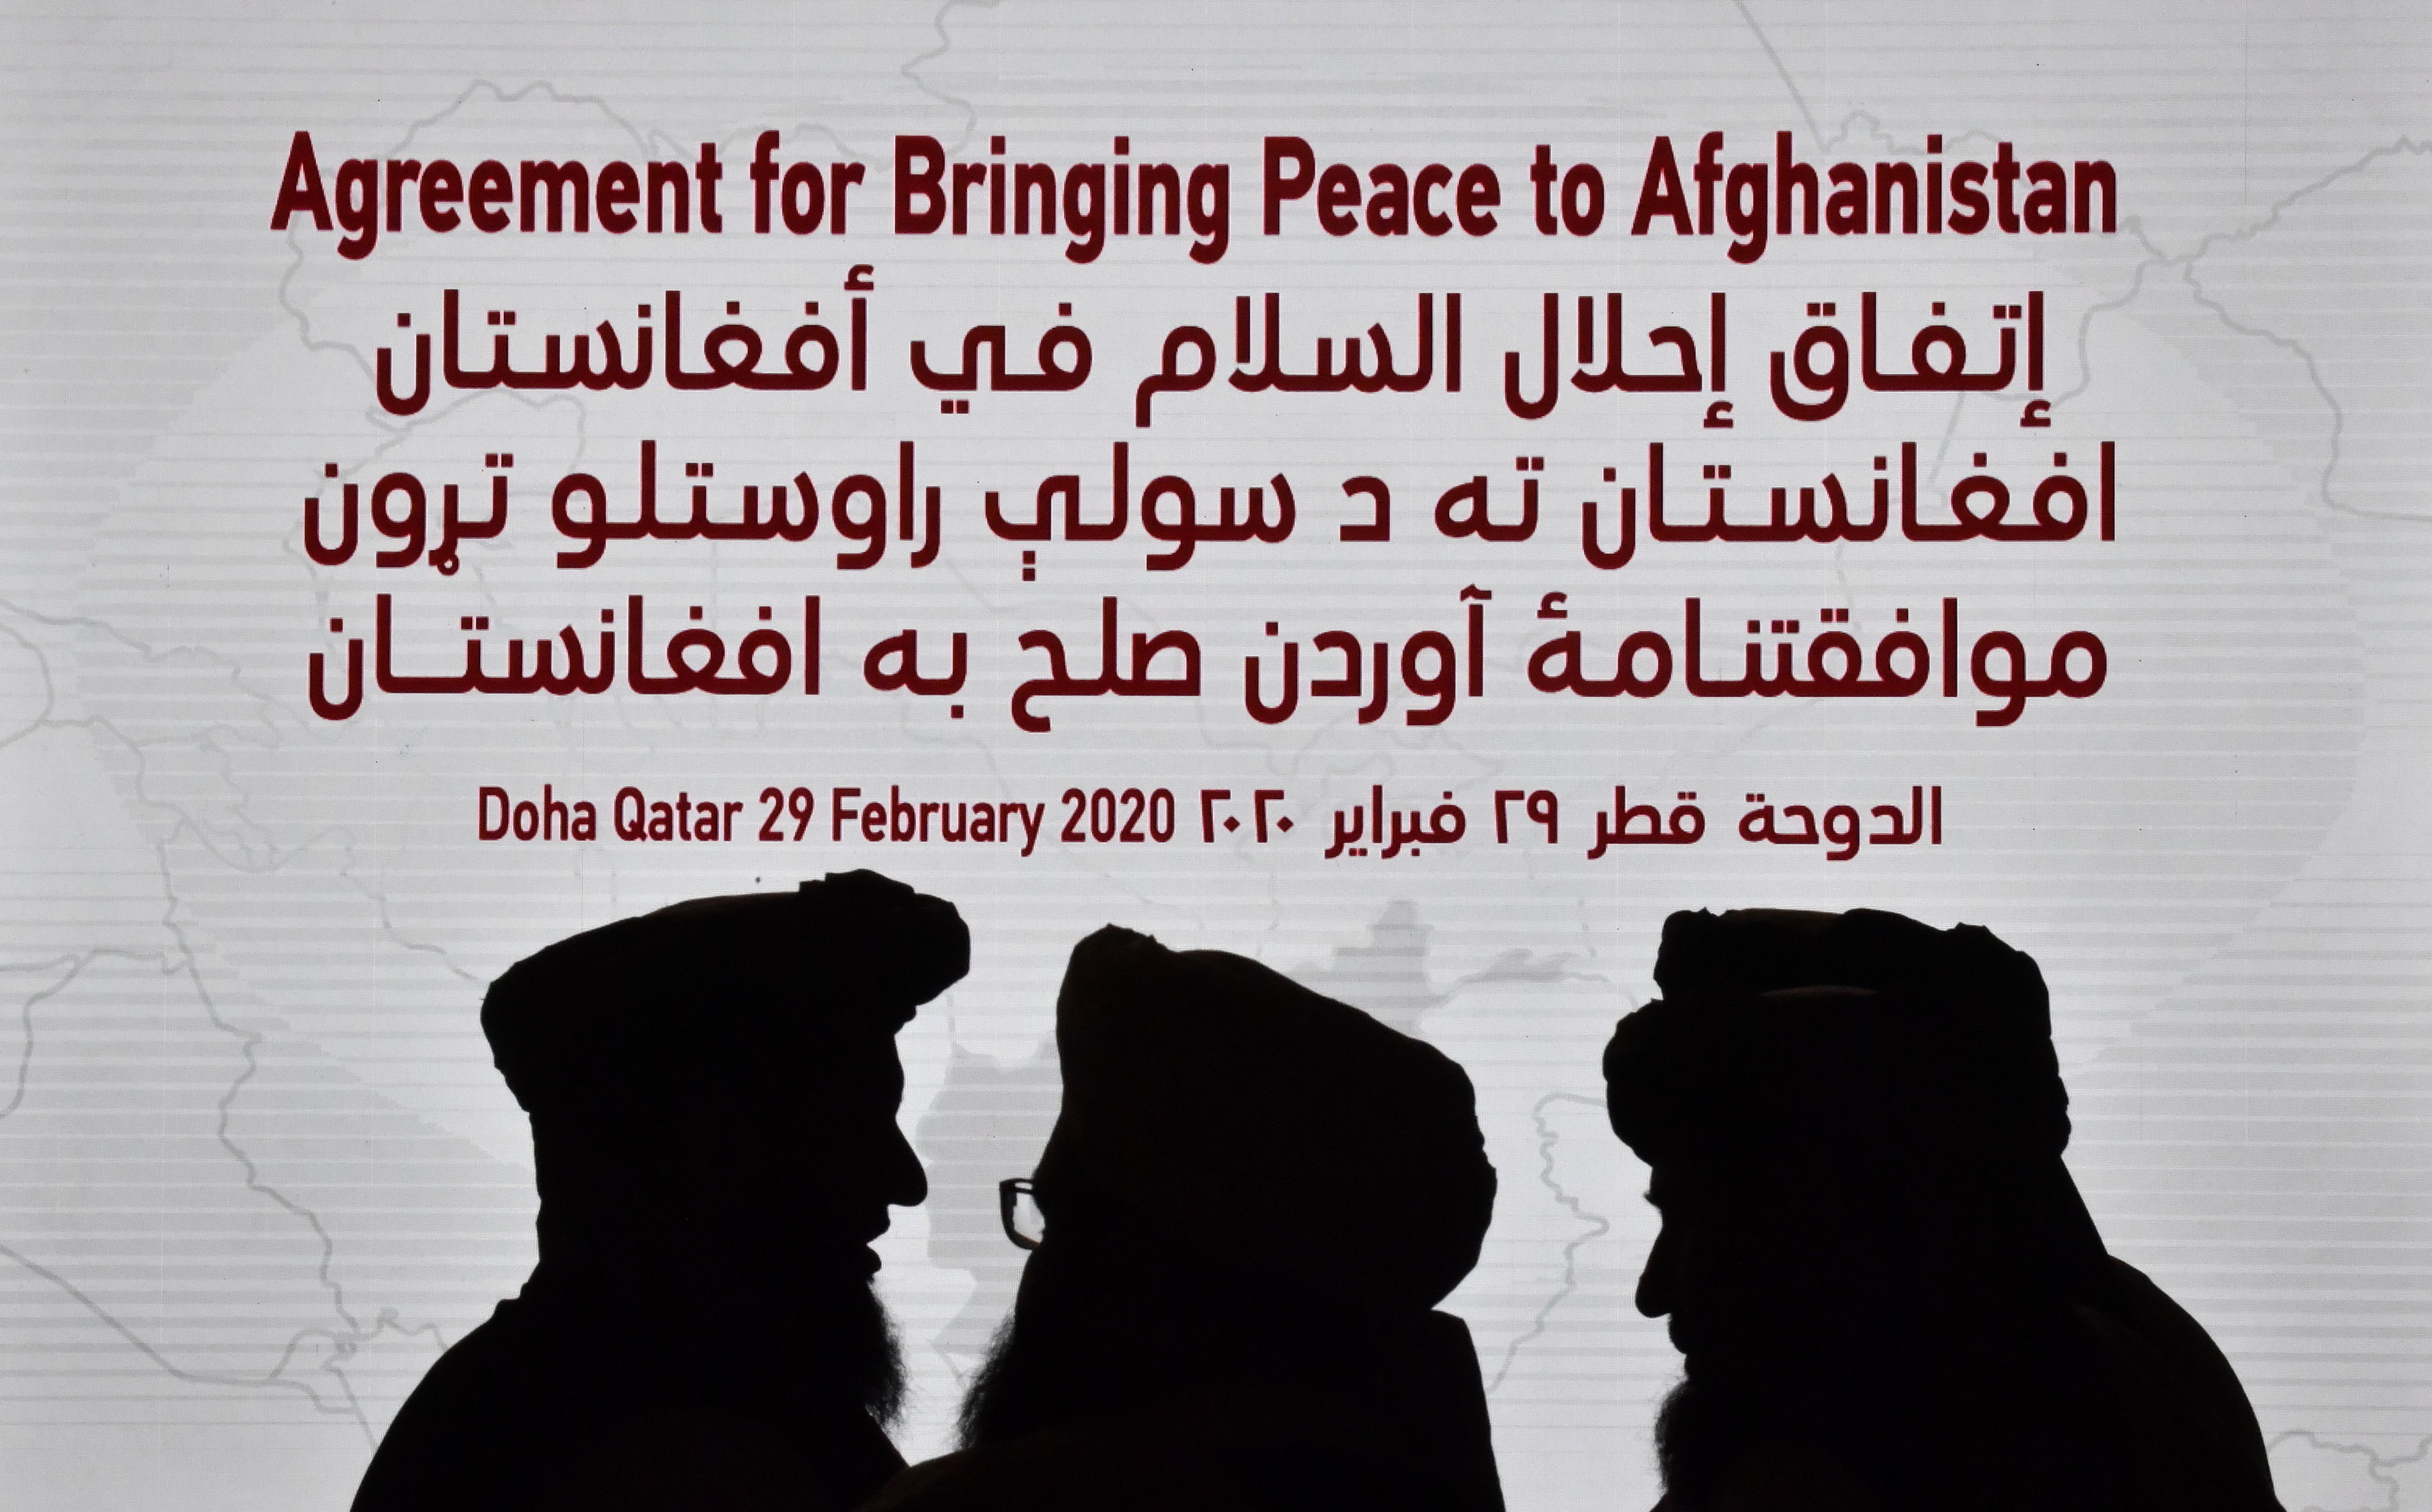 Taliban peace deal